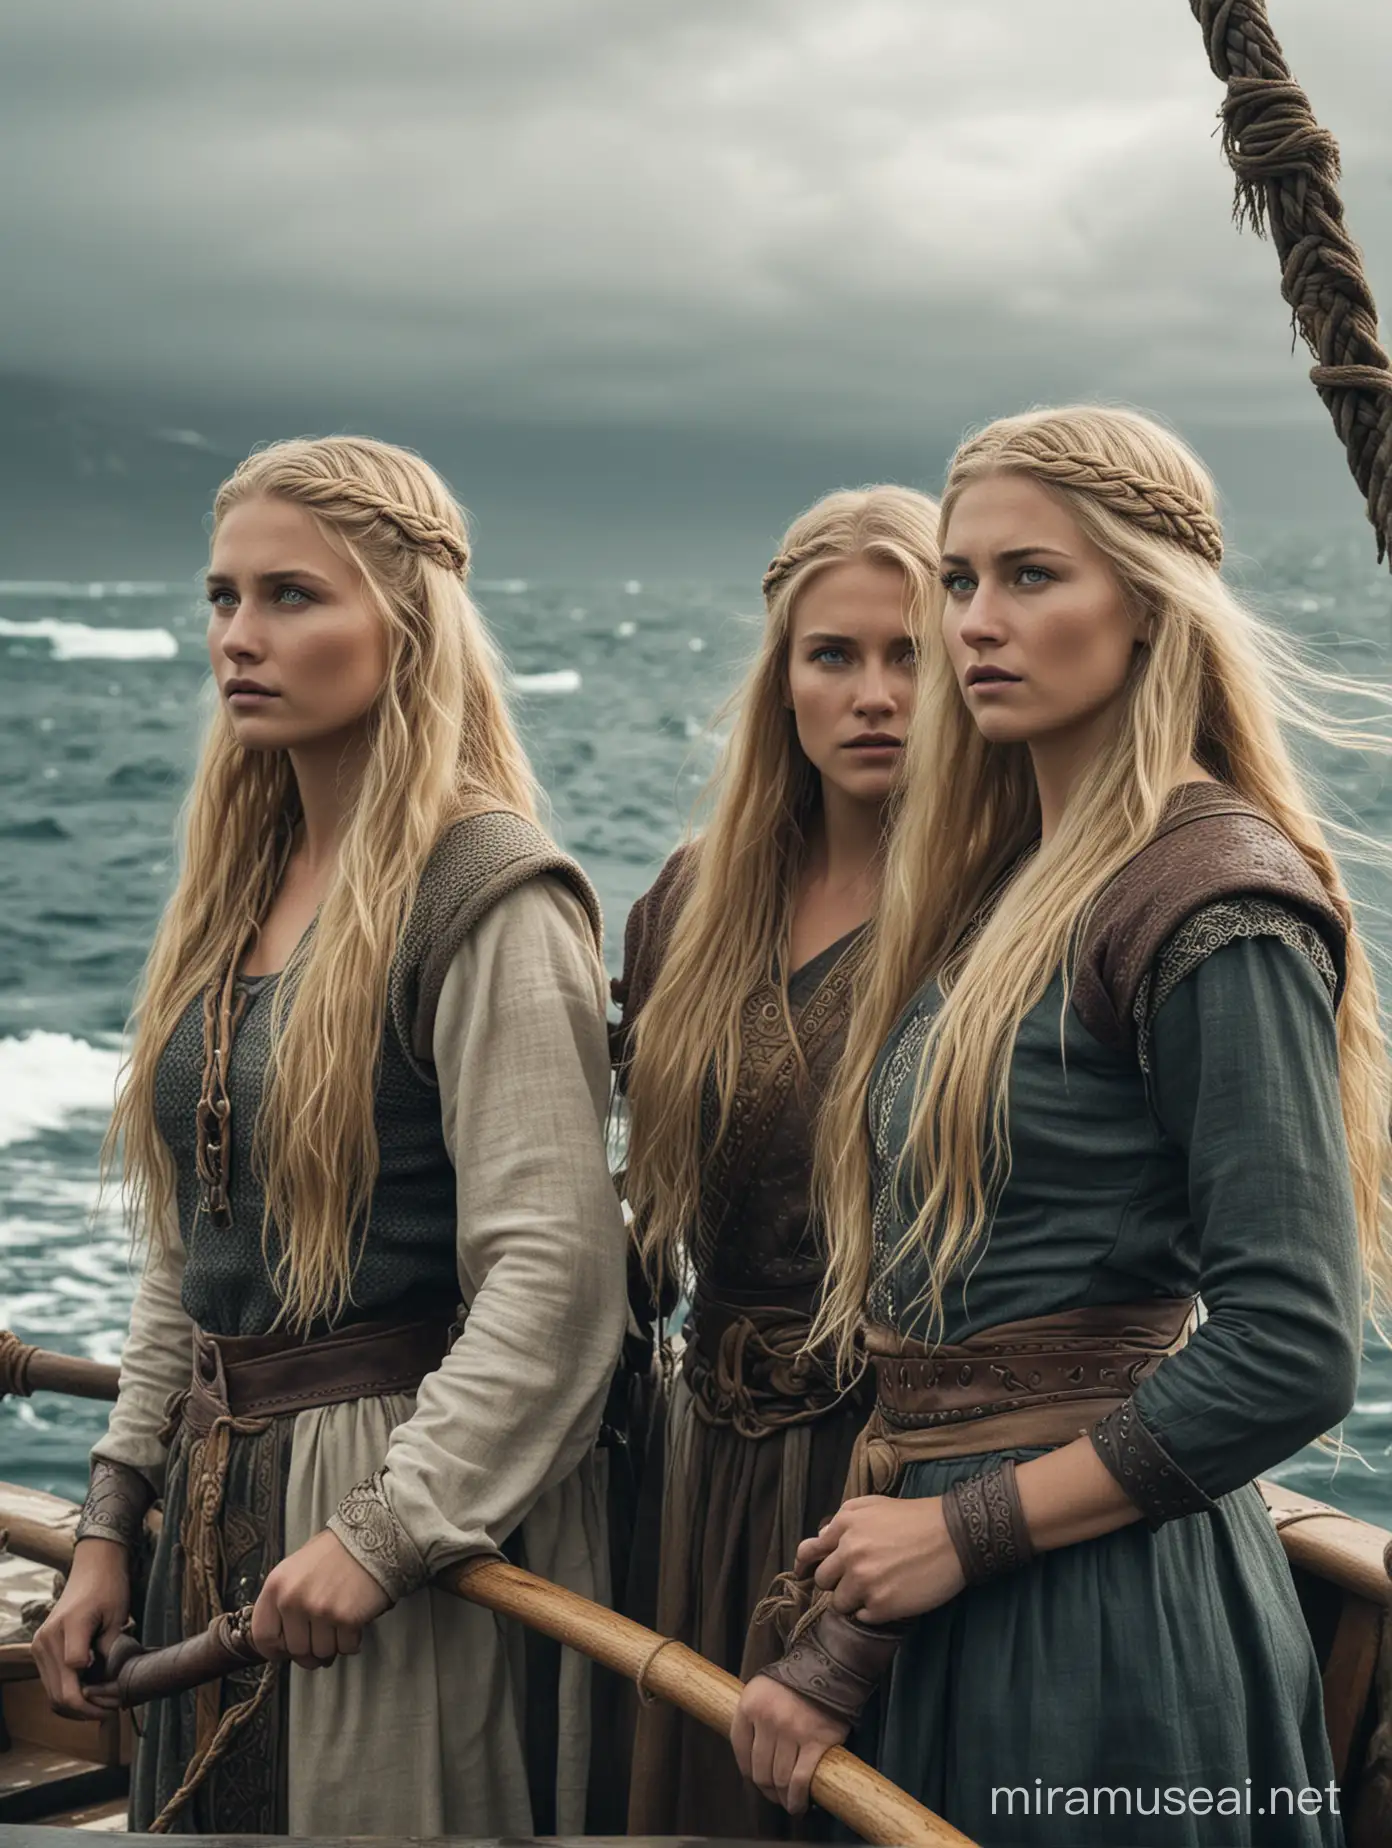 Vikings women  with long blonde hair, on a boat in the ocean
